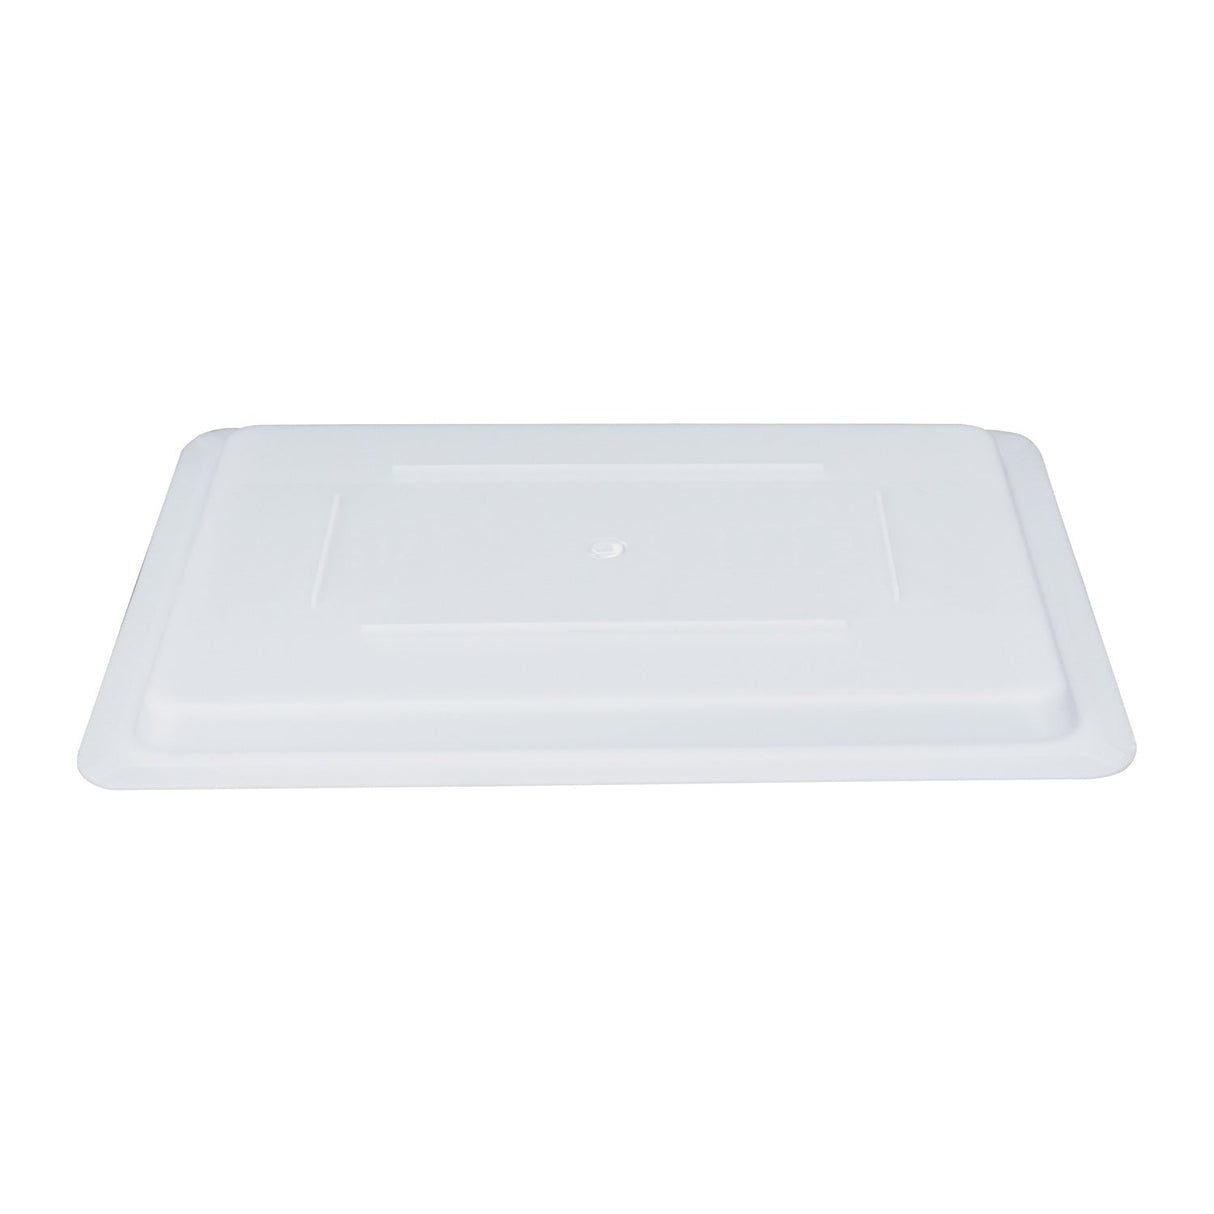 Cover Food Storage Box PE Half Size White 18x12"